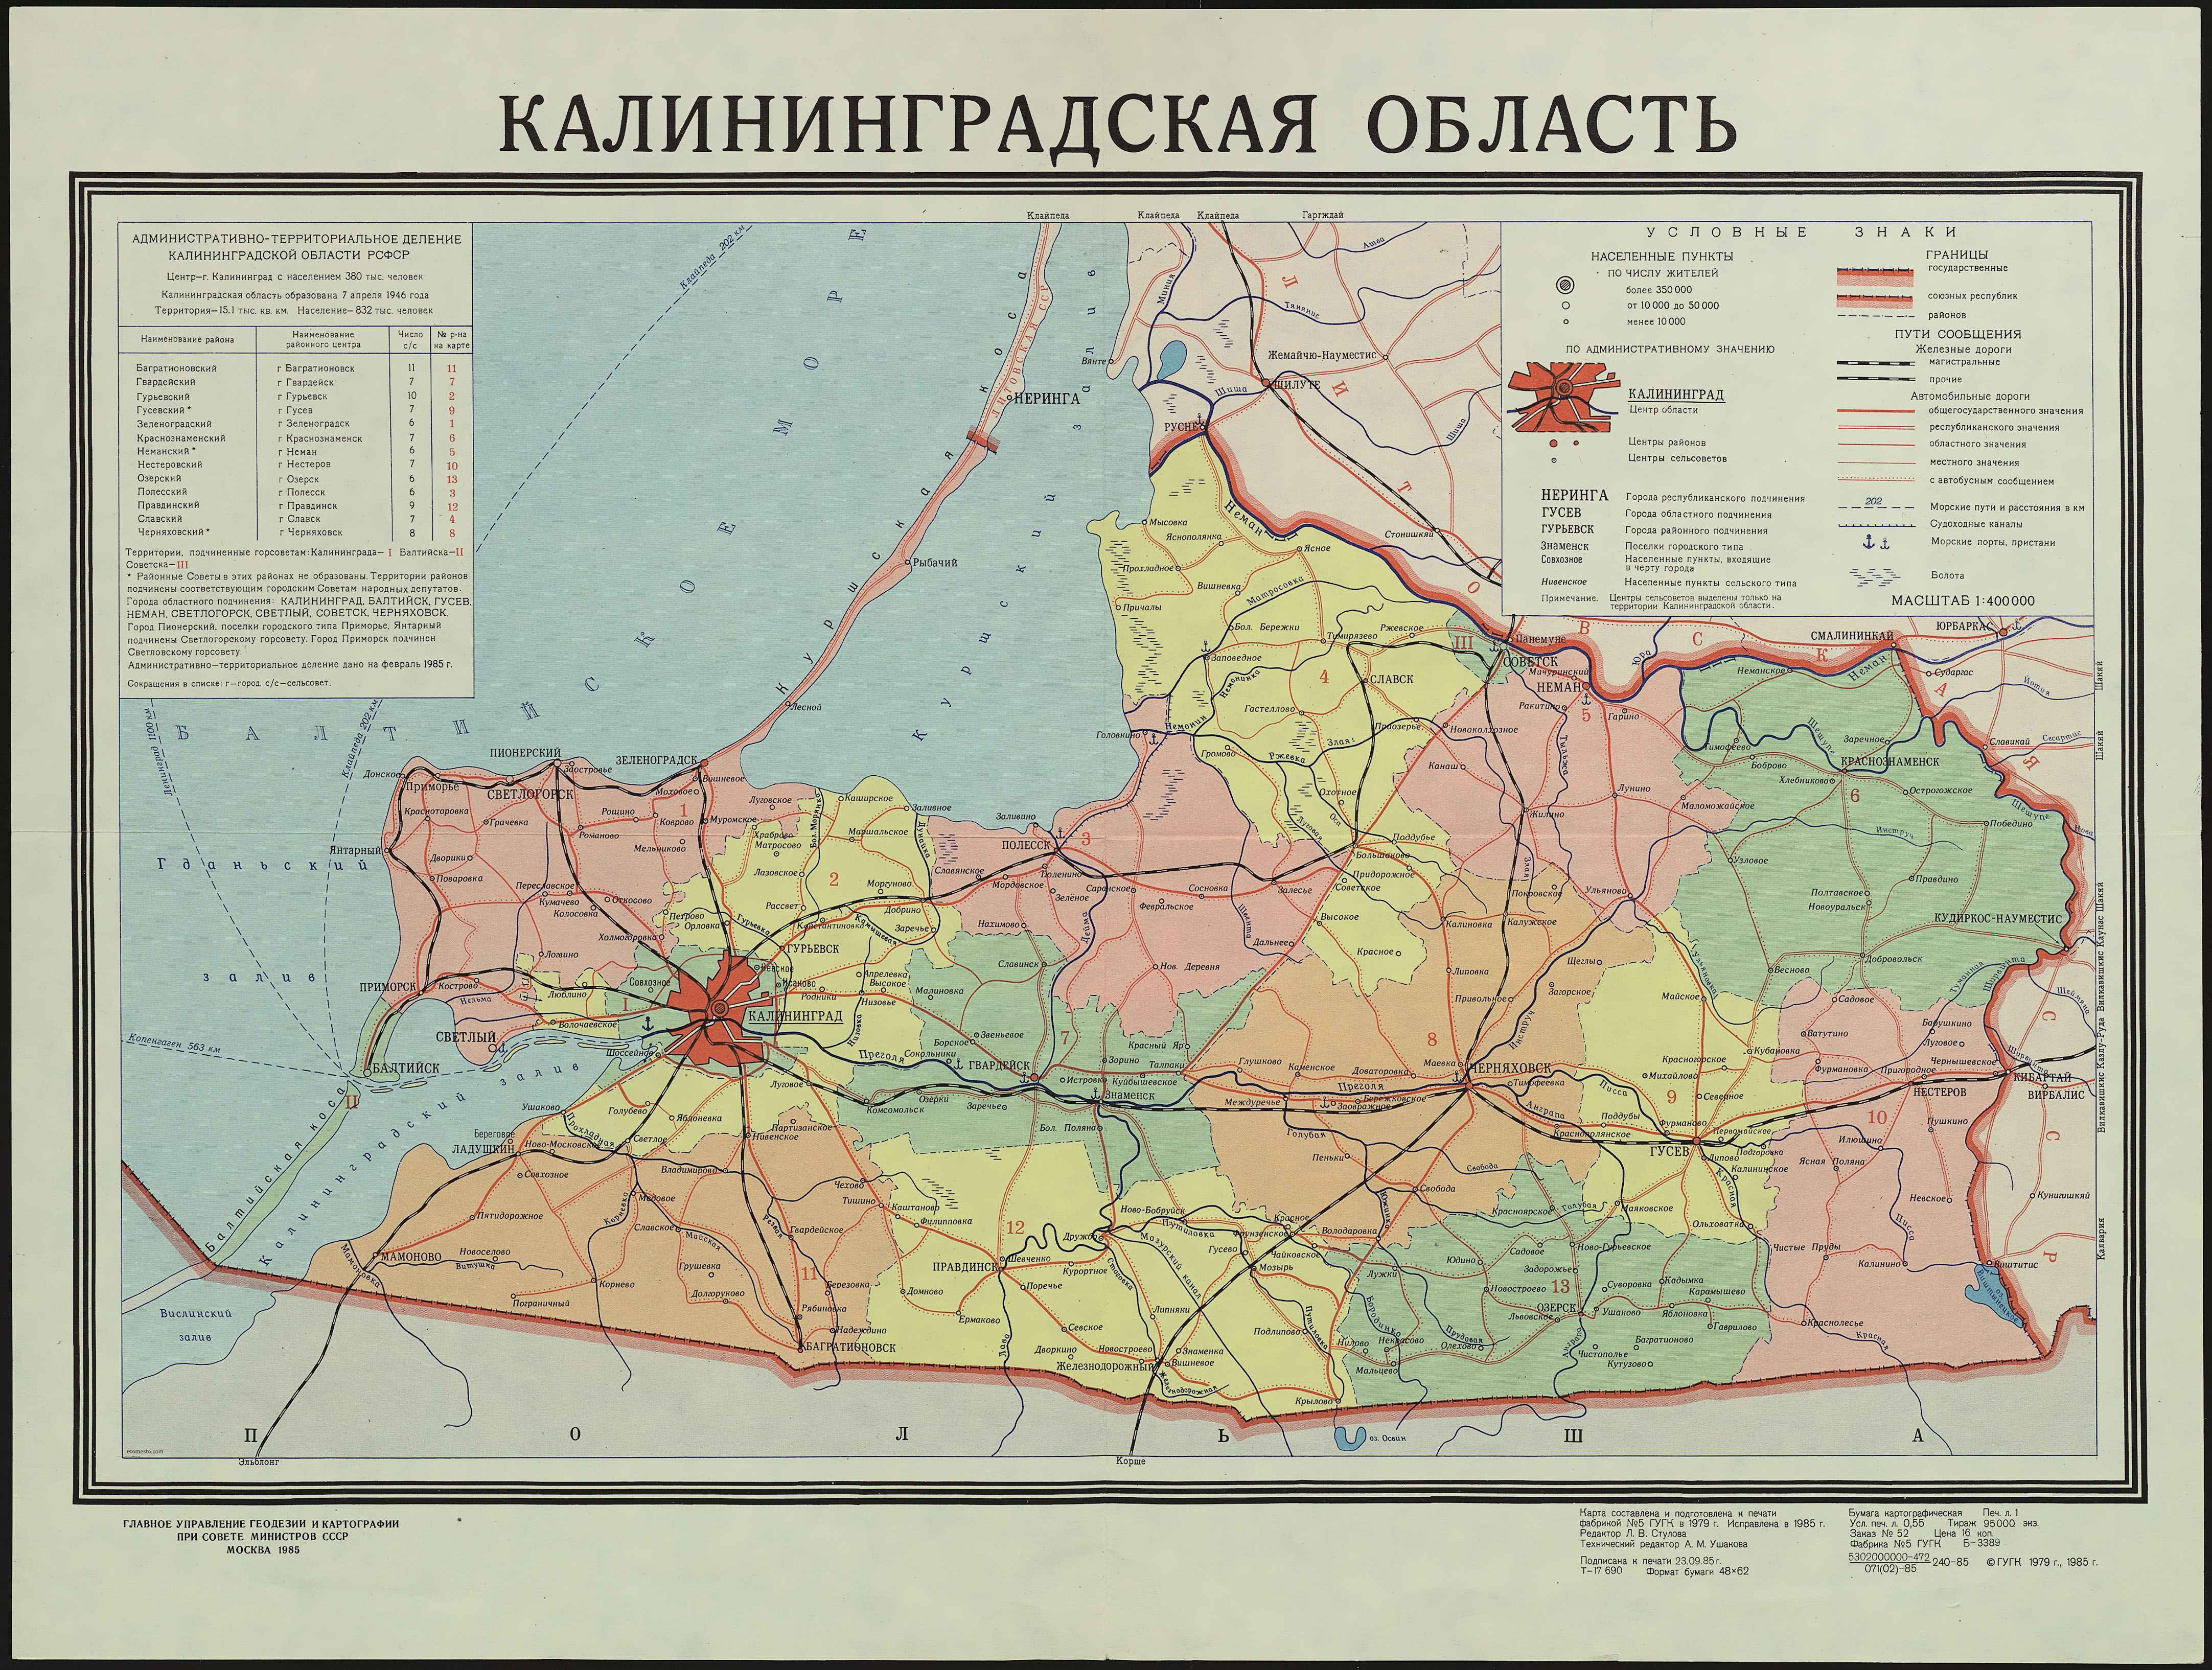 Administrative map of the Kaliningrad region, 1985